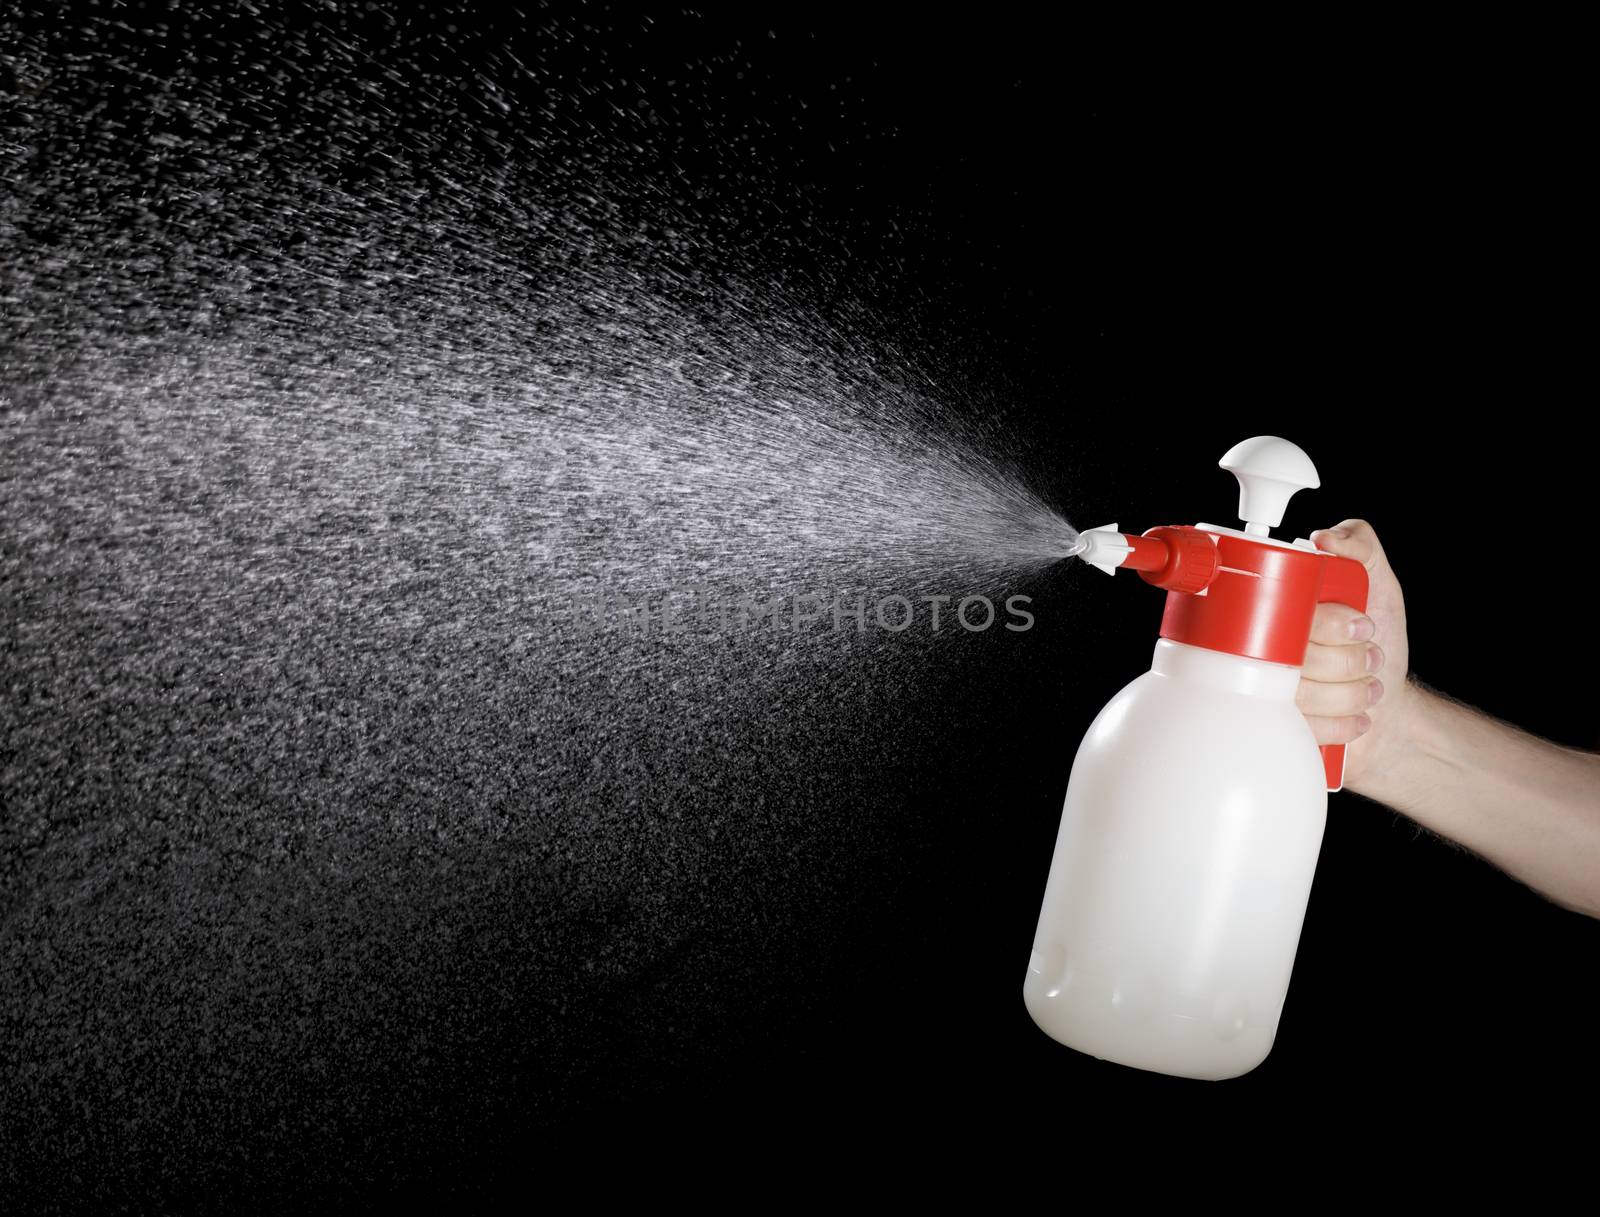 Liquid spraying from a pump sprayer.